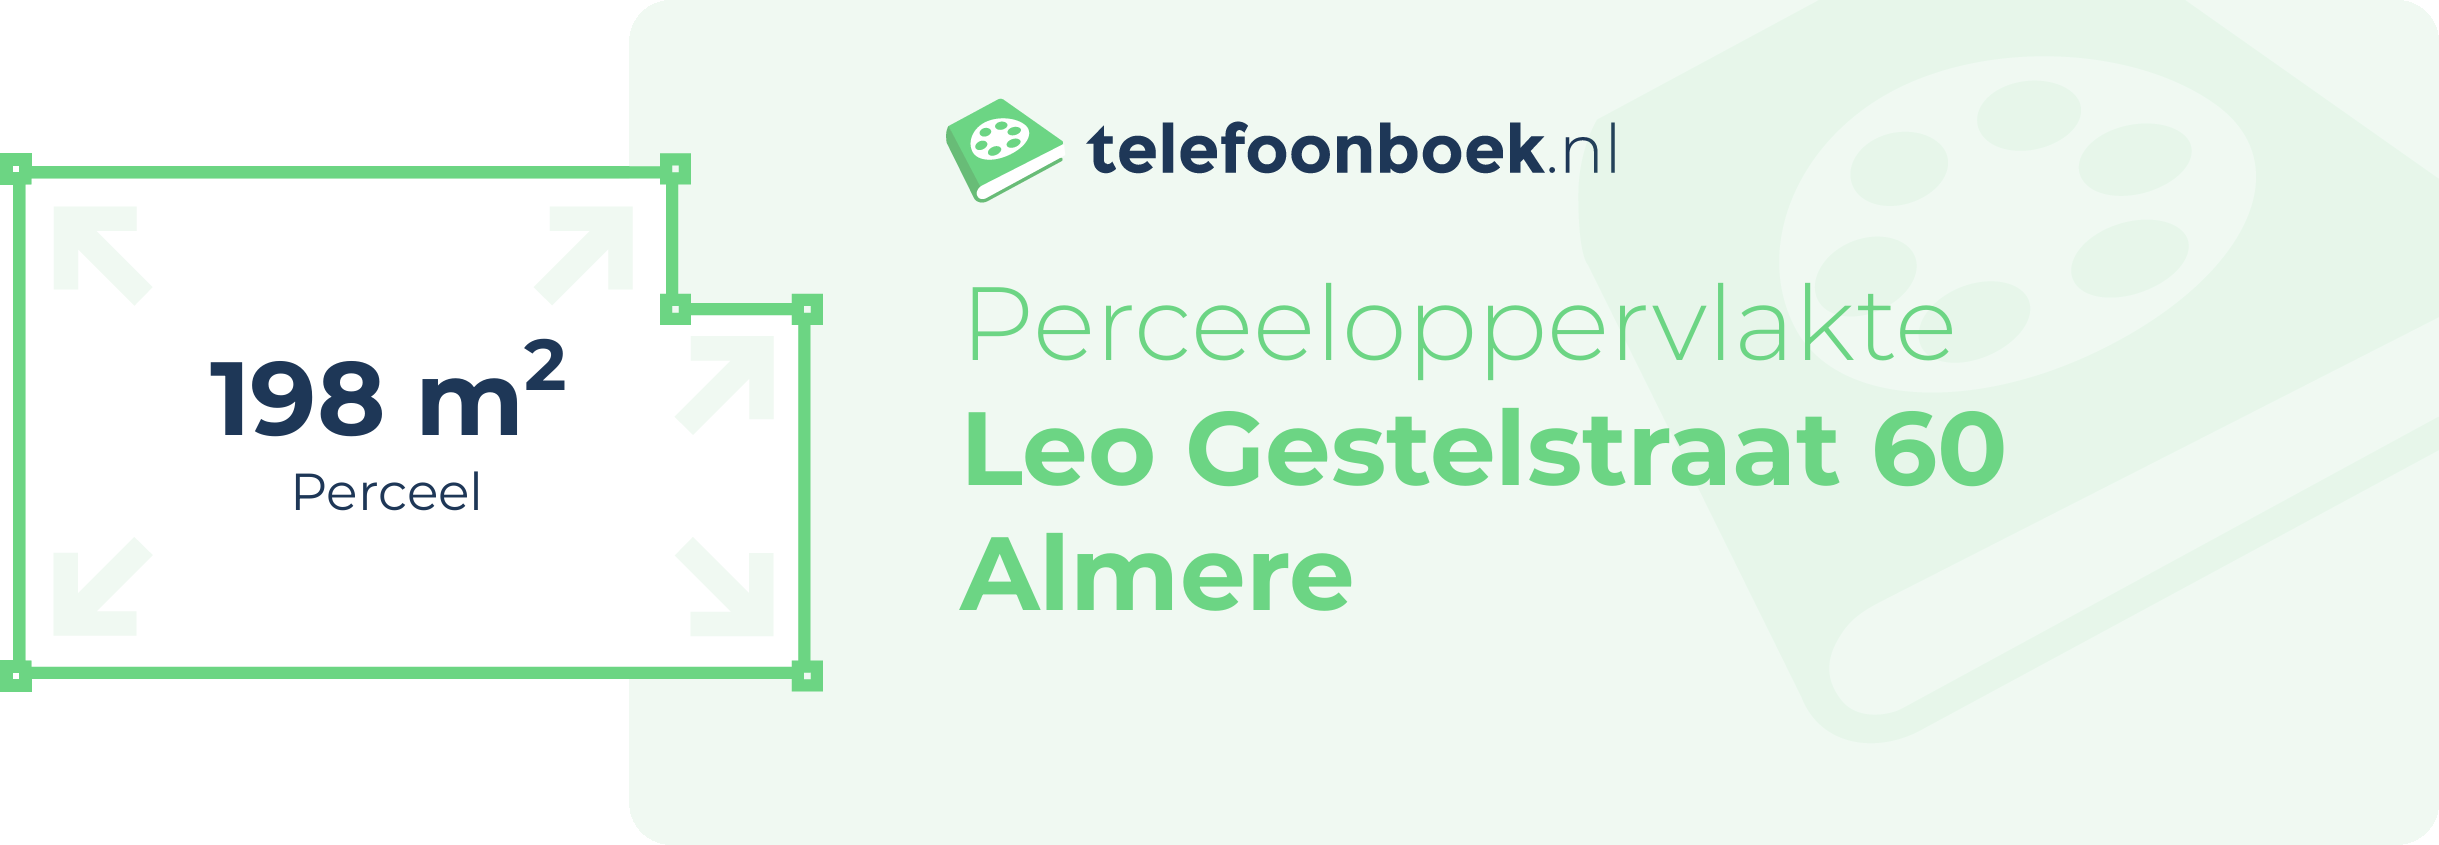 Perceeloppervlakte Leo Gestelstraat 60 Almere